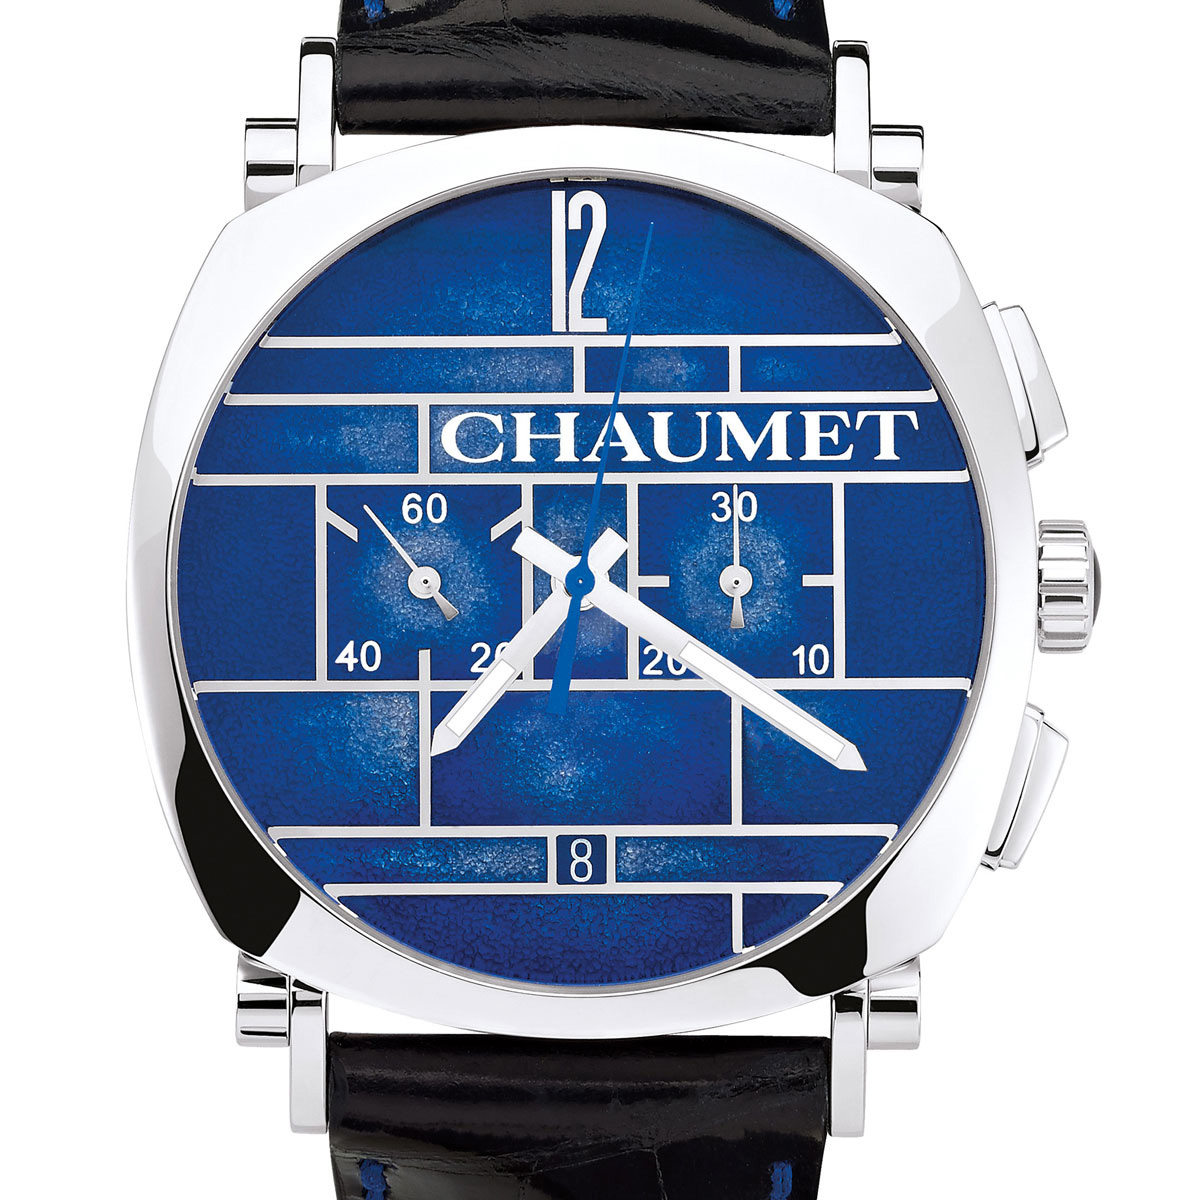 Limited Edition Chaumet Dandy Chronograph El Primero Watch